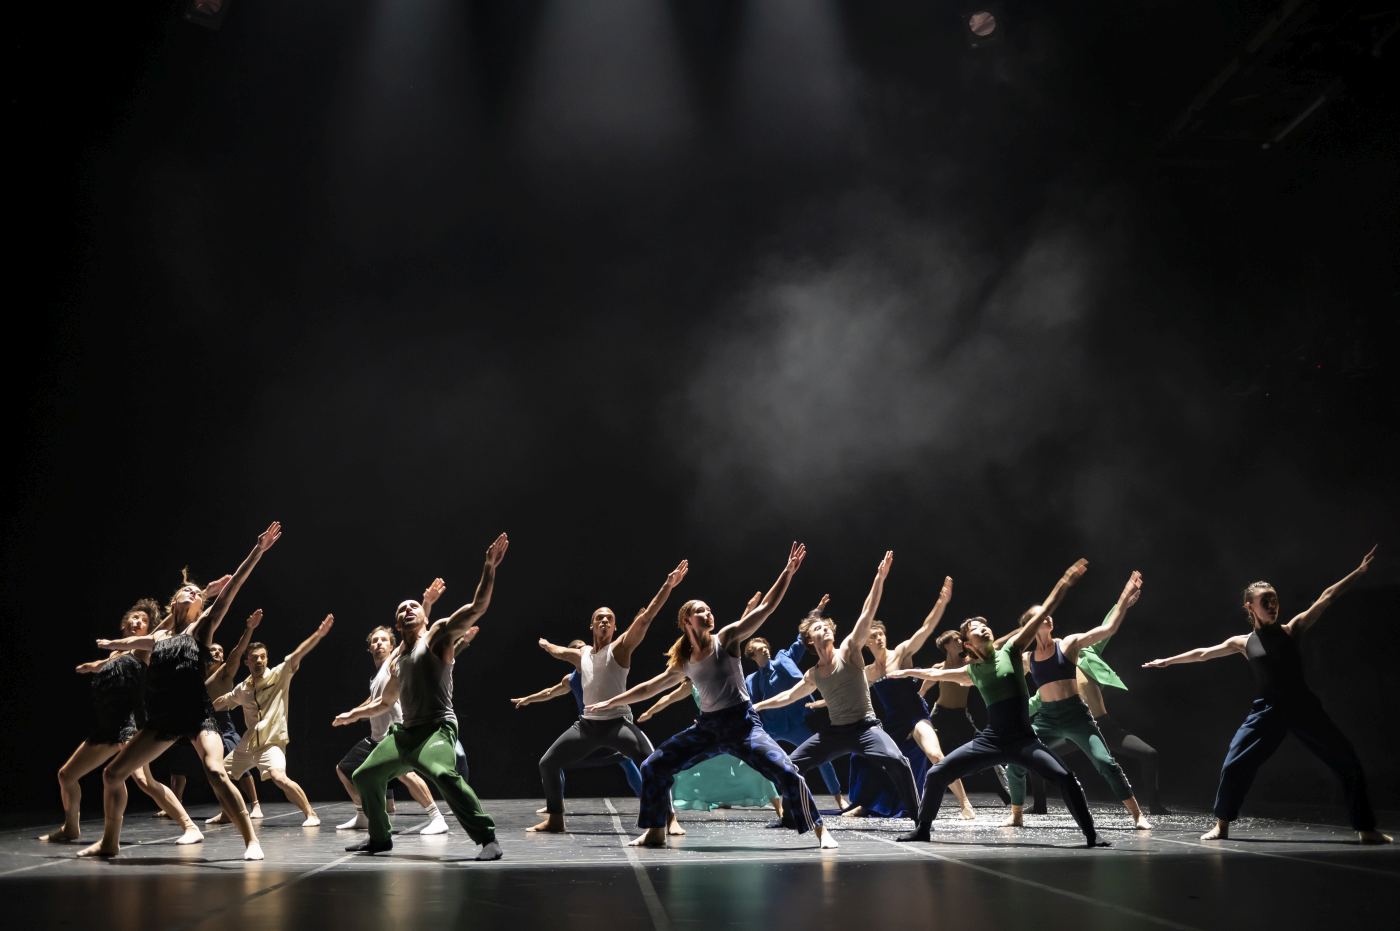 8. Ensemble, “Nighttime Showtime” by J.Hernandez, Ballet of the State Theater Nuremberg 2022 © B.Stöß